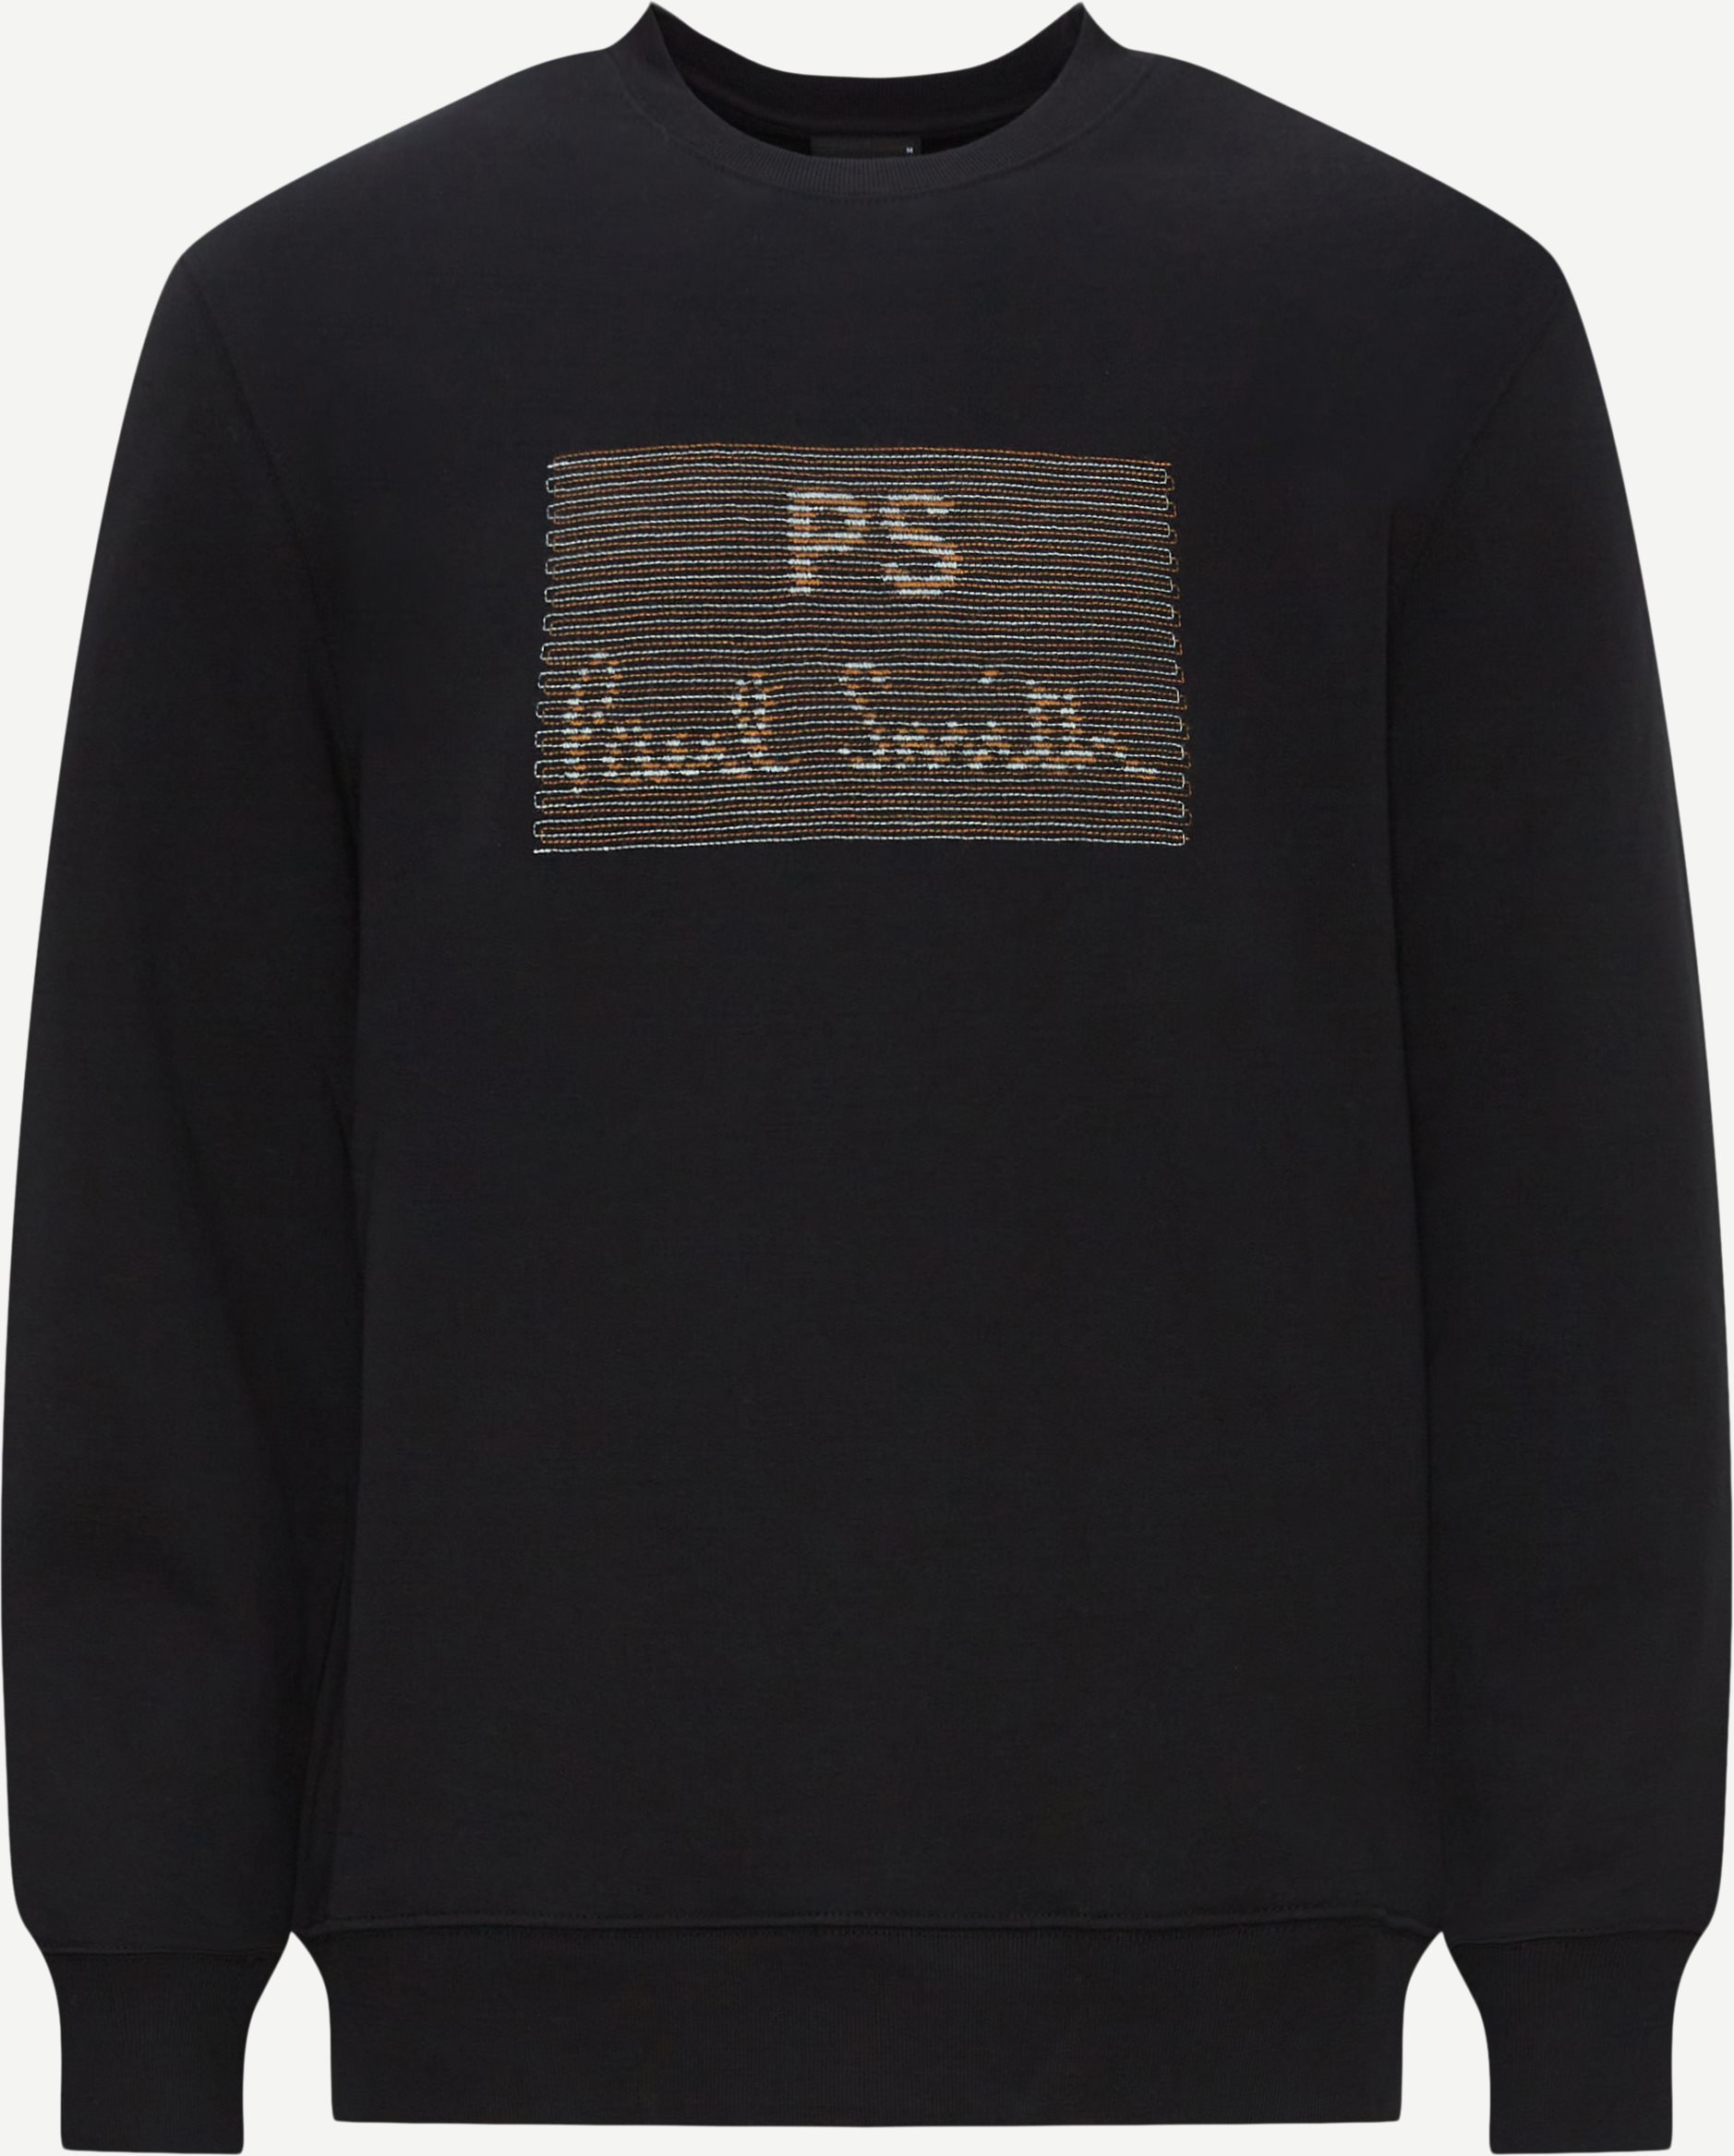 PS Paul Smith Sweatshirts 668UE-MP4372 MENS REG FIT SWEATSHIRT Black